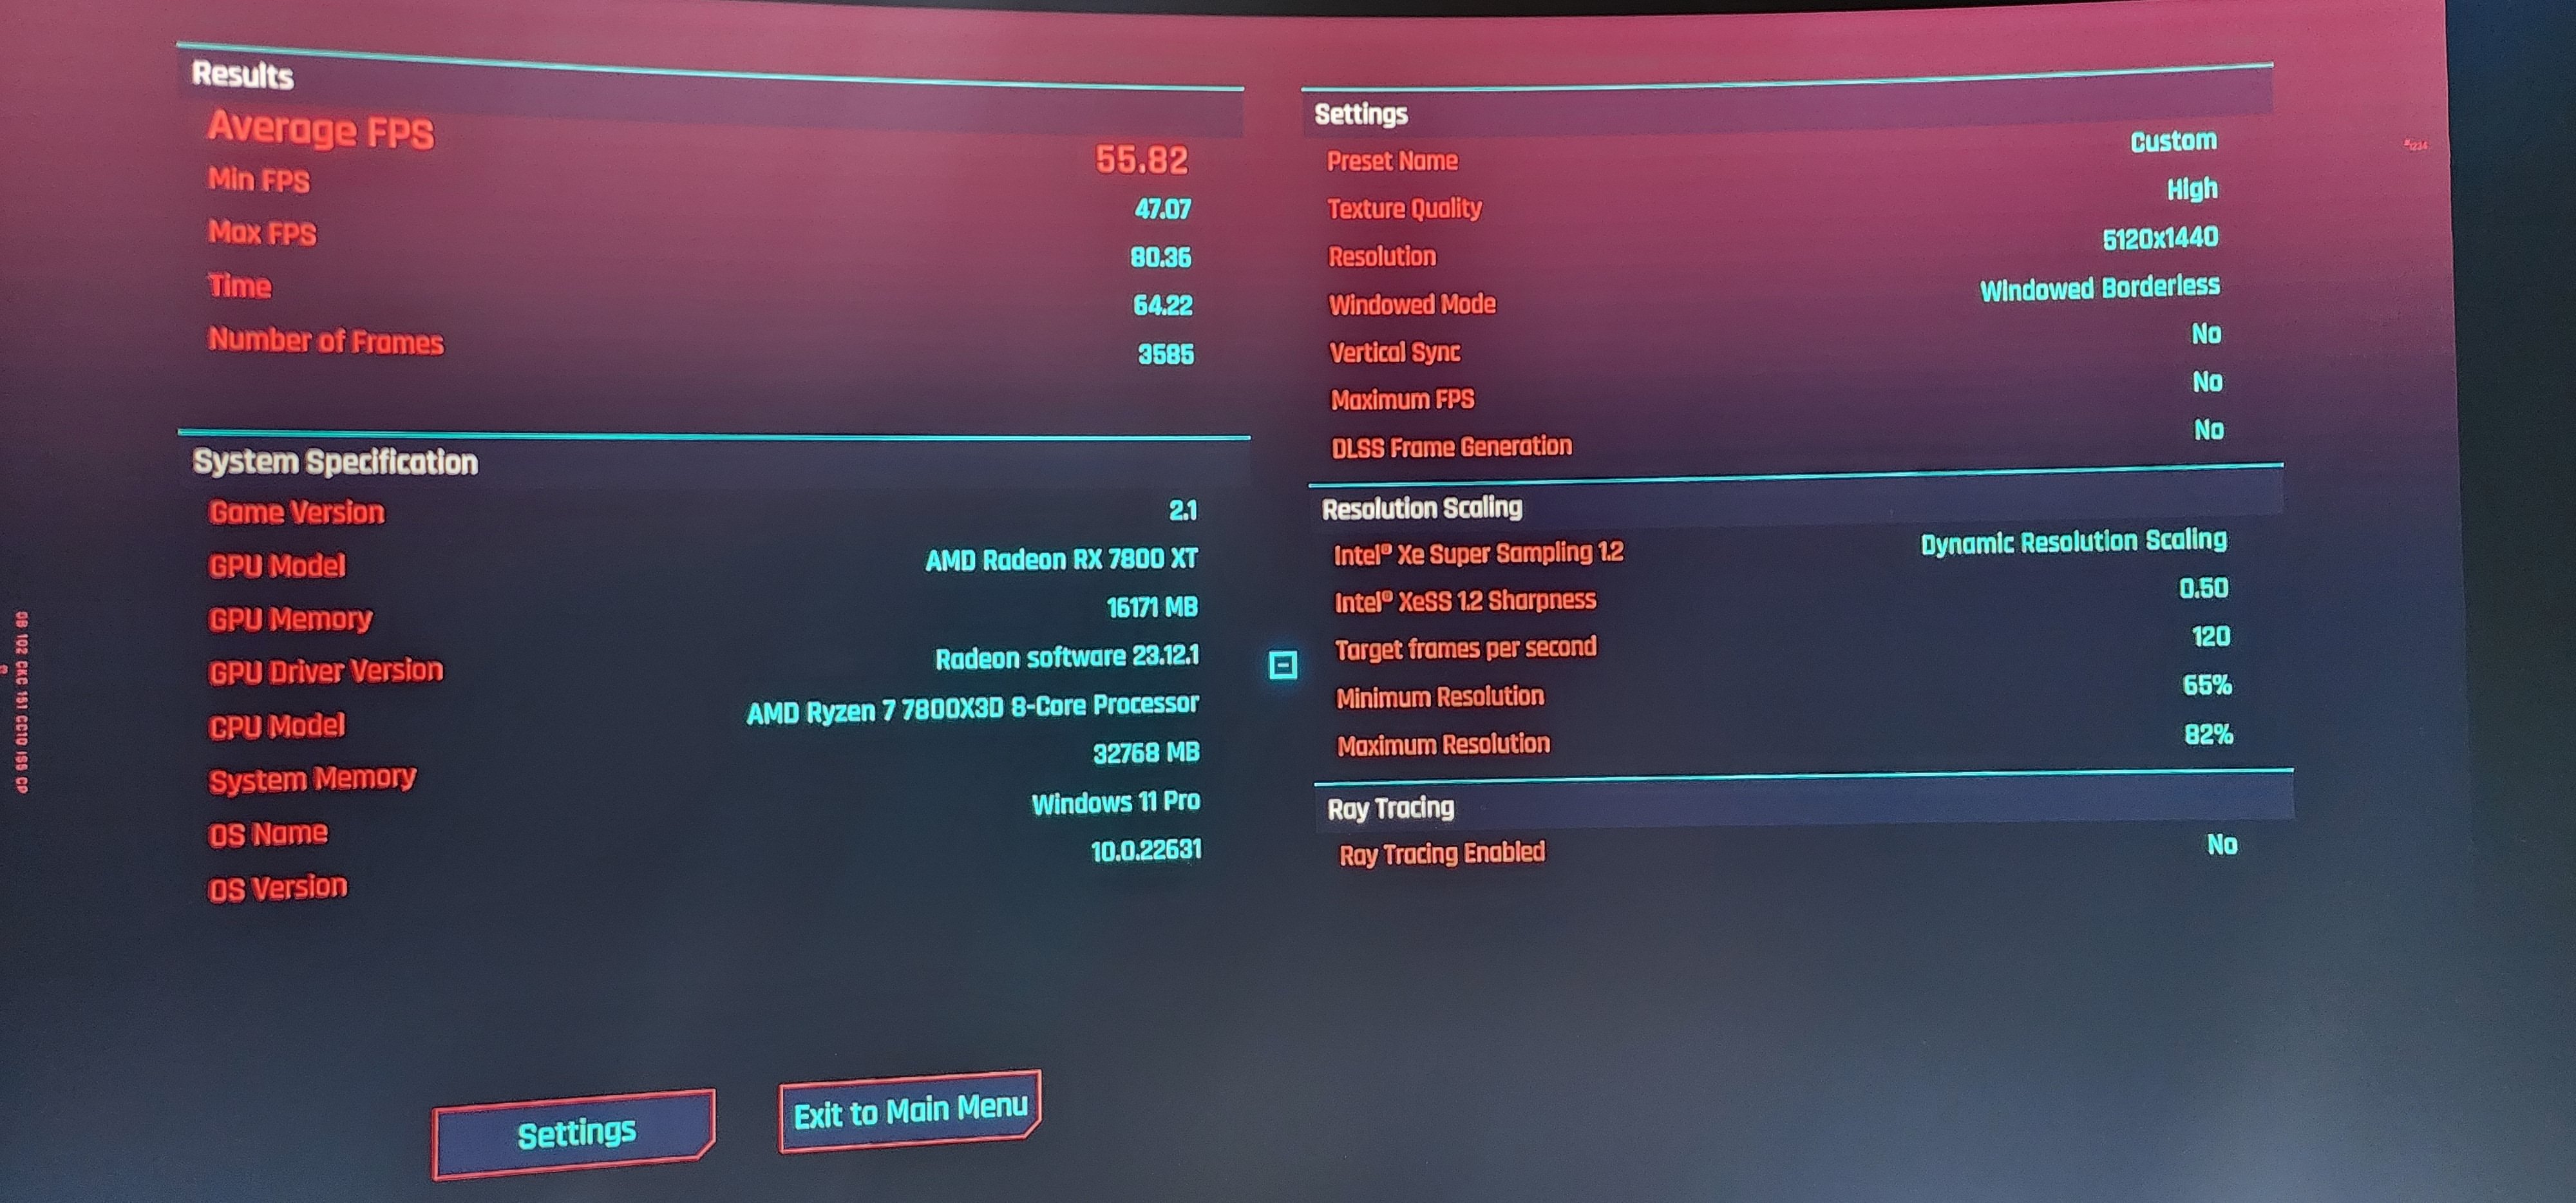 Cyberpunk 2077 results